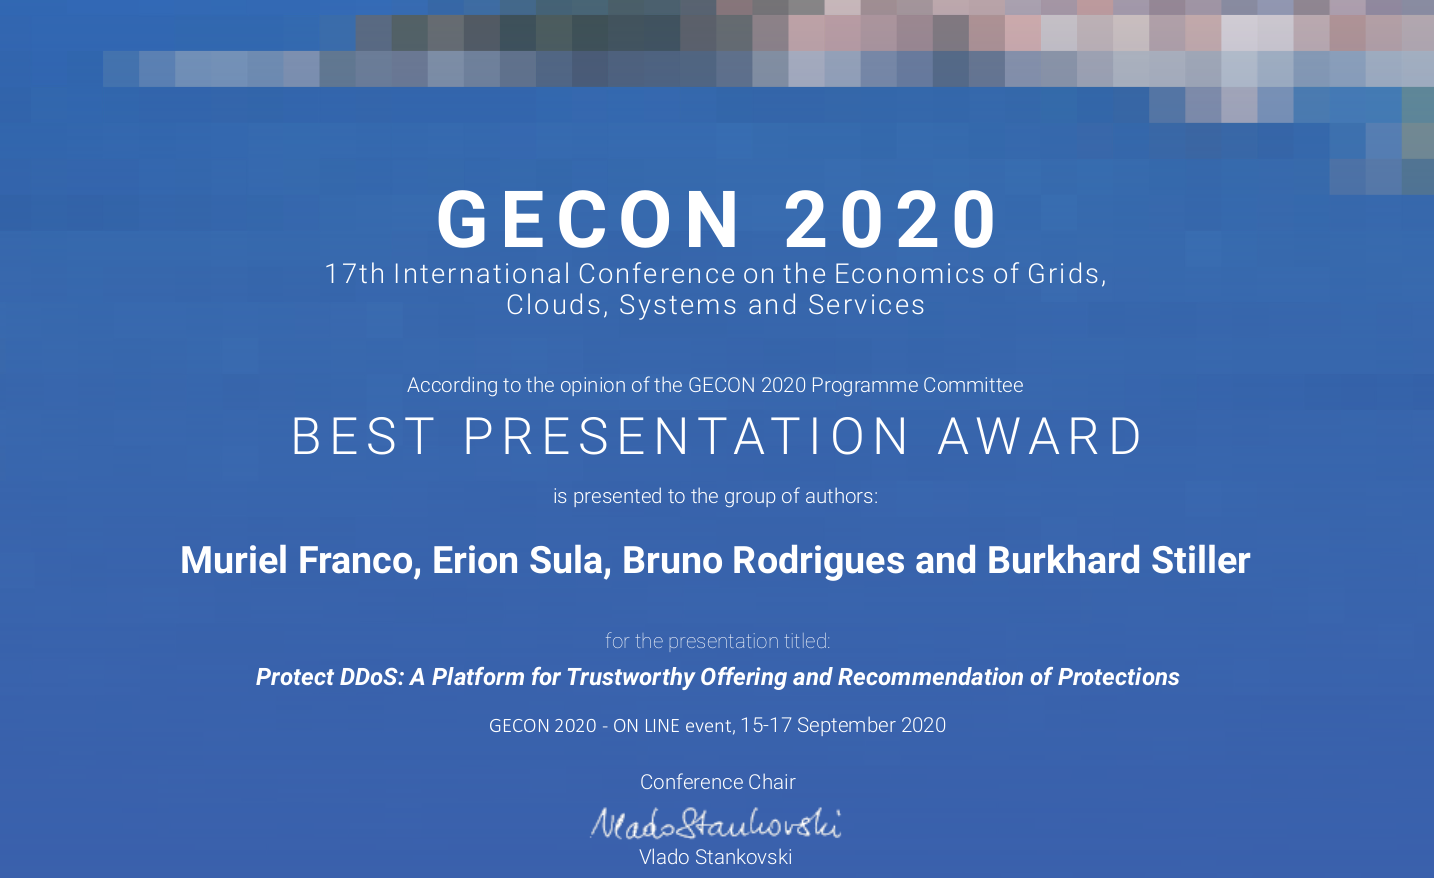 GECON's Award Certificate